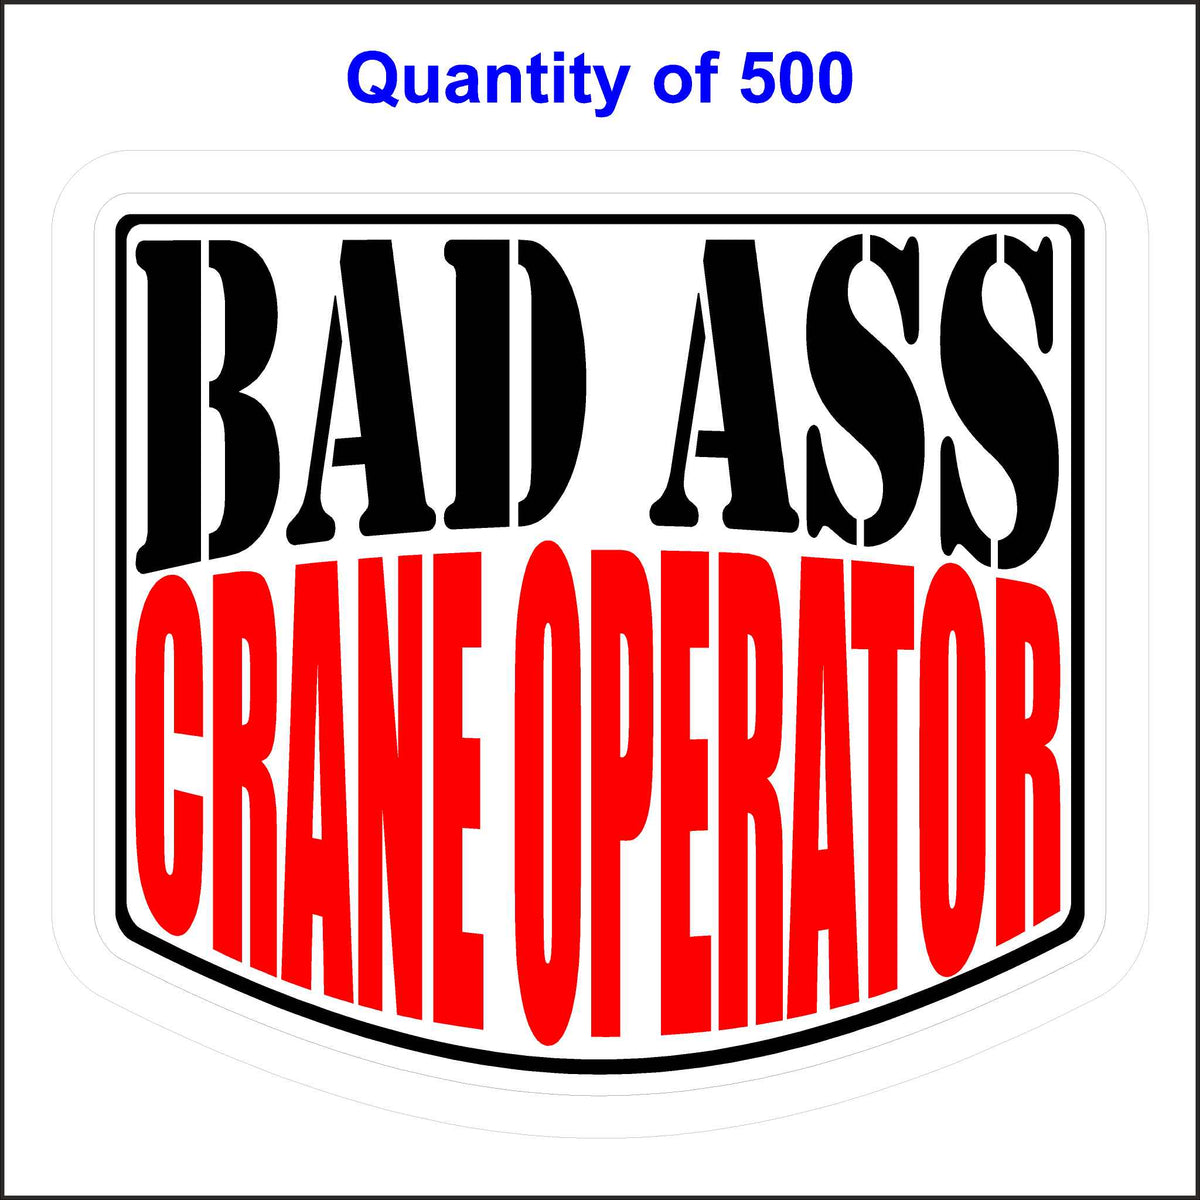 Bad Ass Crane Operator Stickers 500 Quantity.